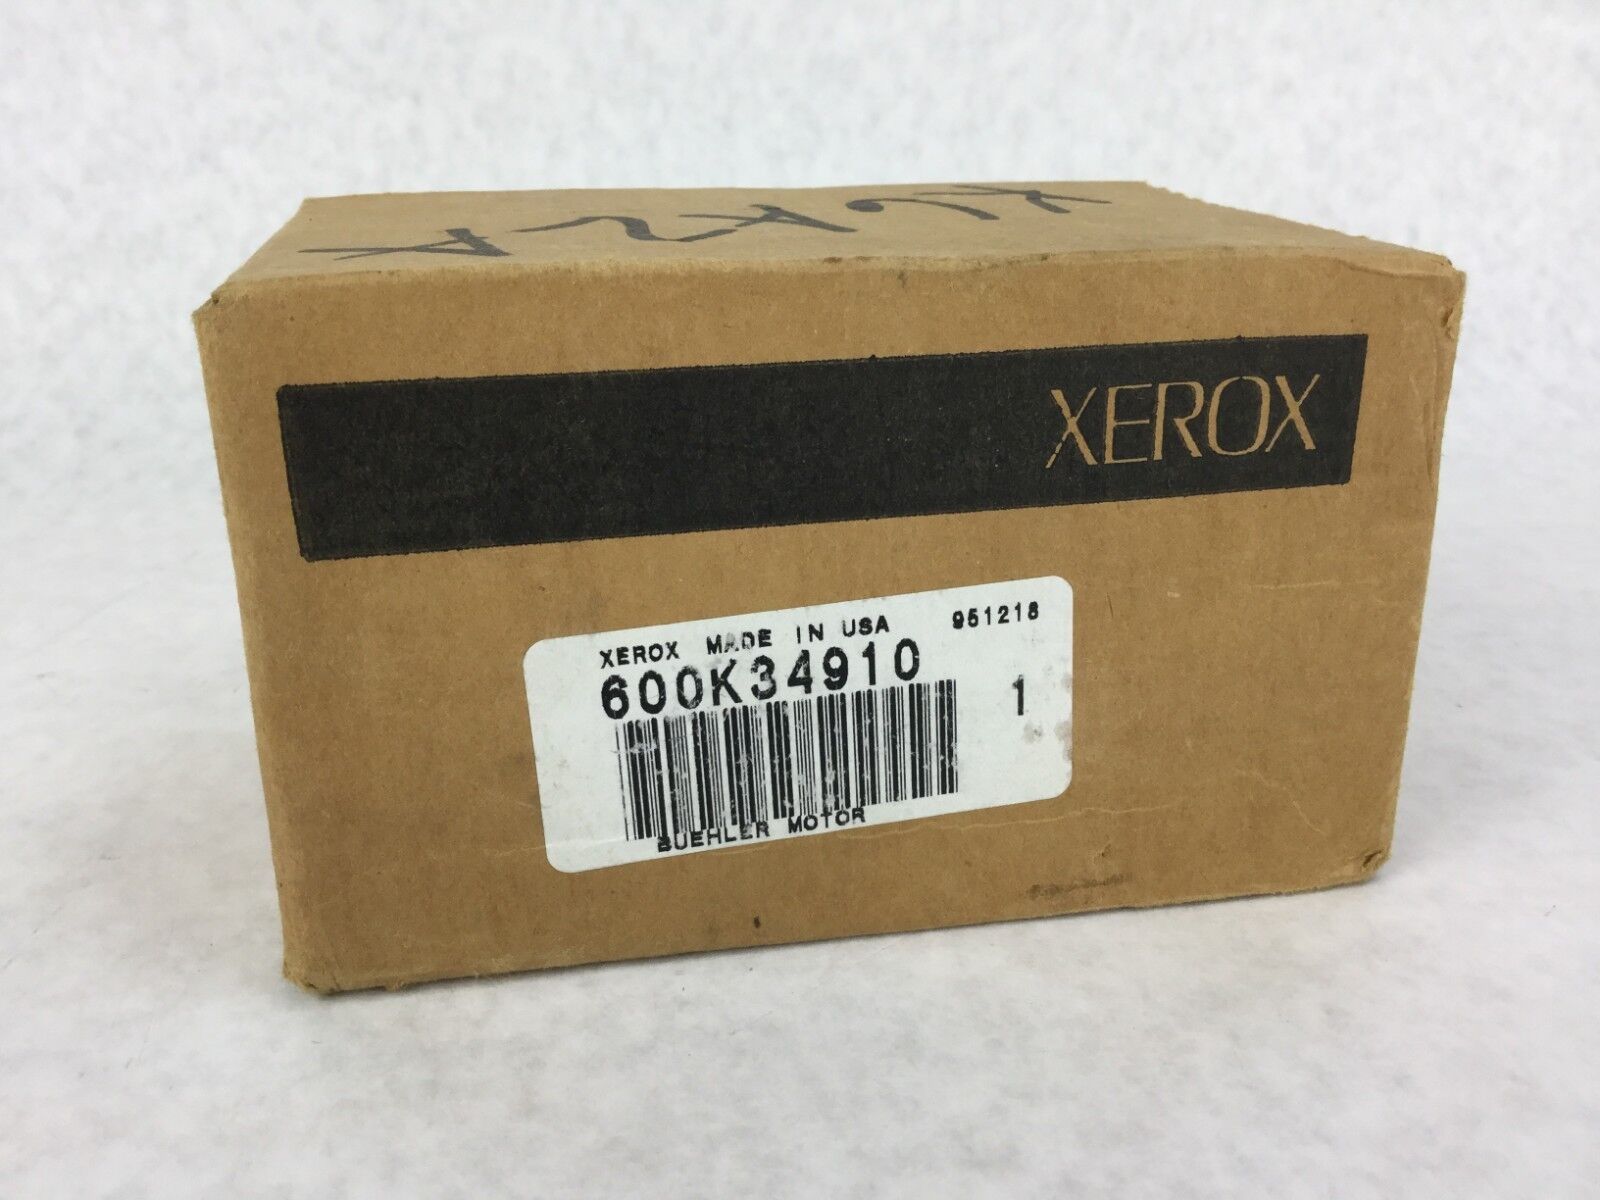 Genuine Xerox Buehler Motor Kit  600K34910